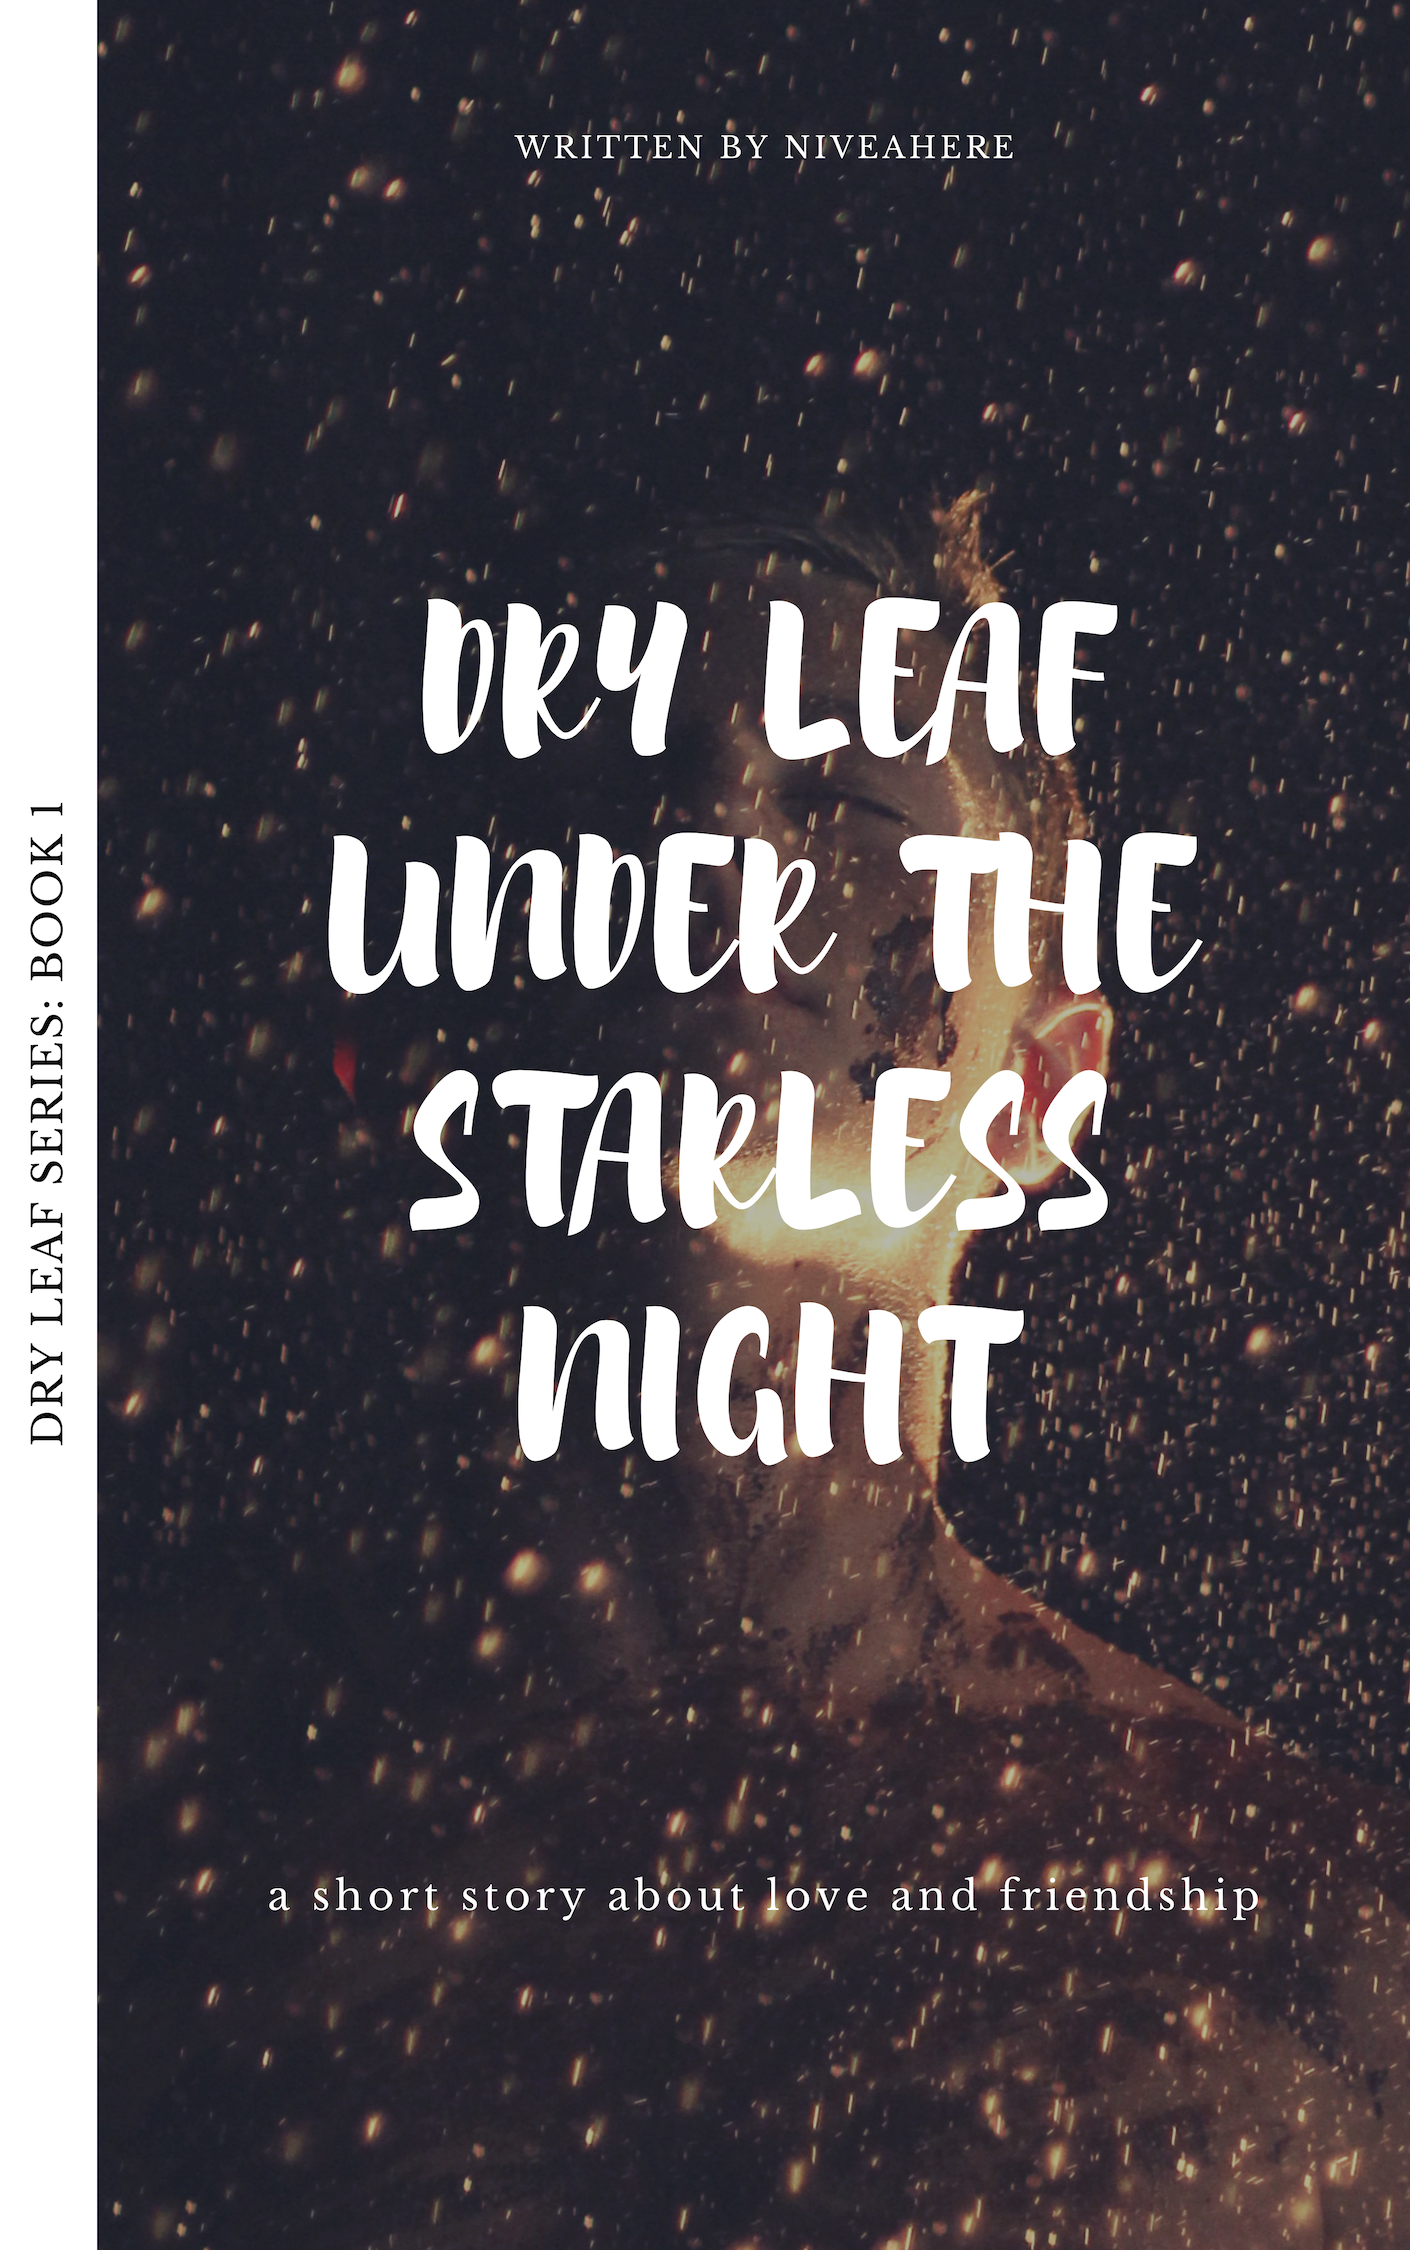 Dry Leaf Under The Starless Night